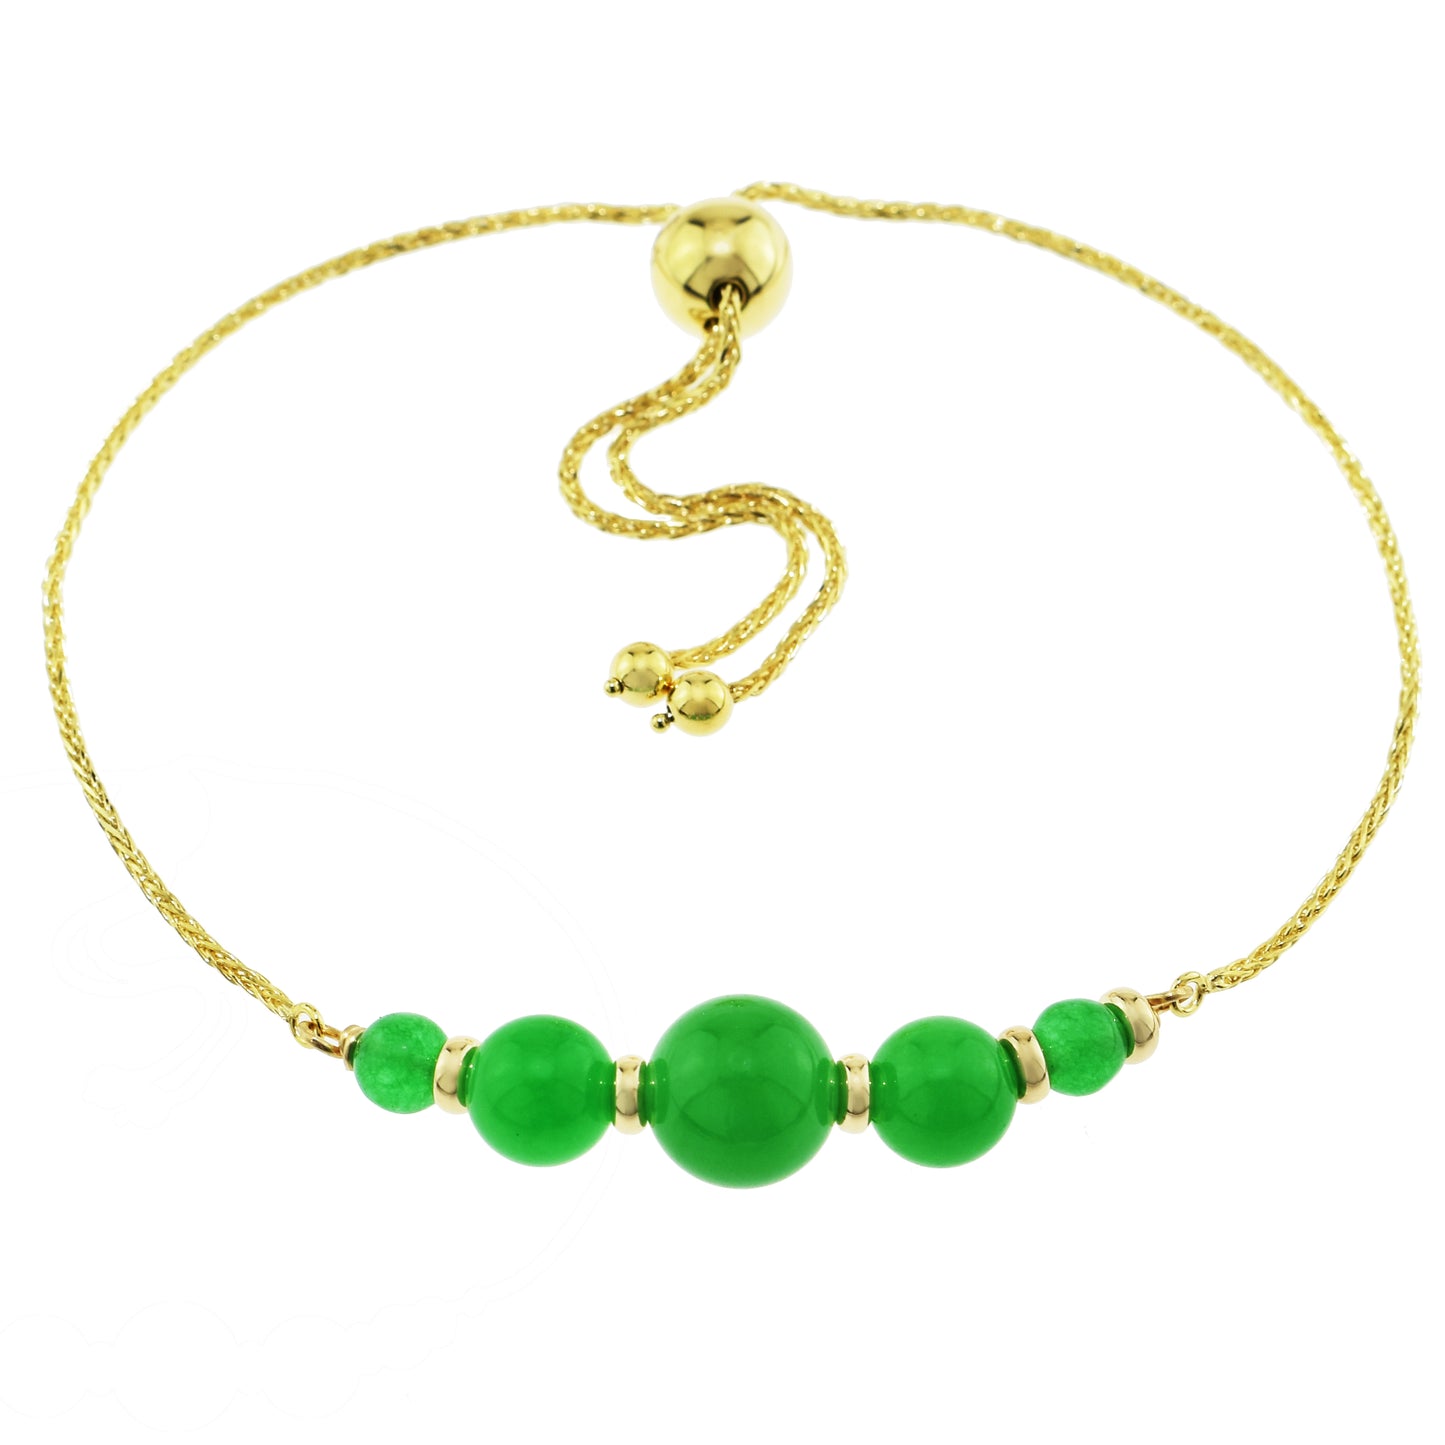 14k Adjustable Bracelet Black Onyx or Green Jade 9.75"